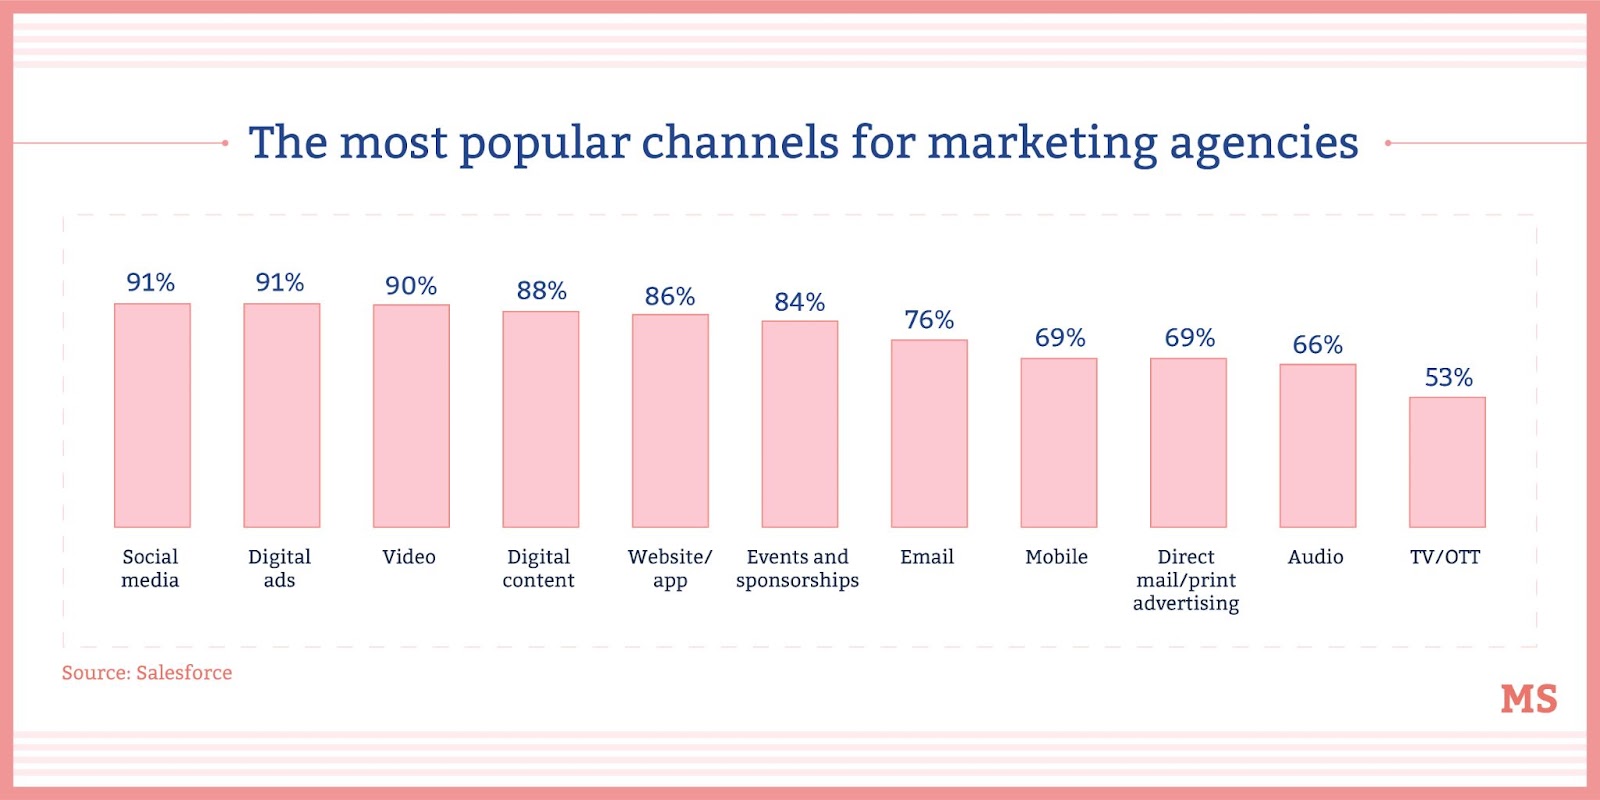 Salesforce statistics of popular channels for marketing agencies, including audio marketing